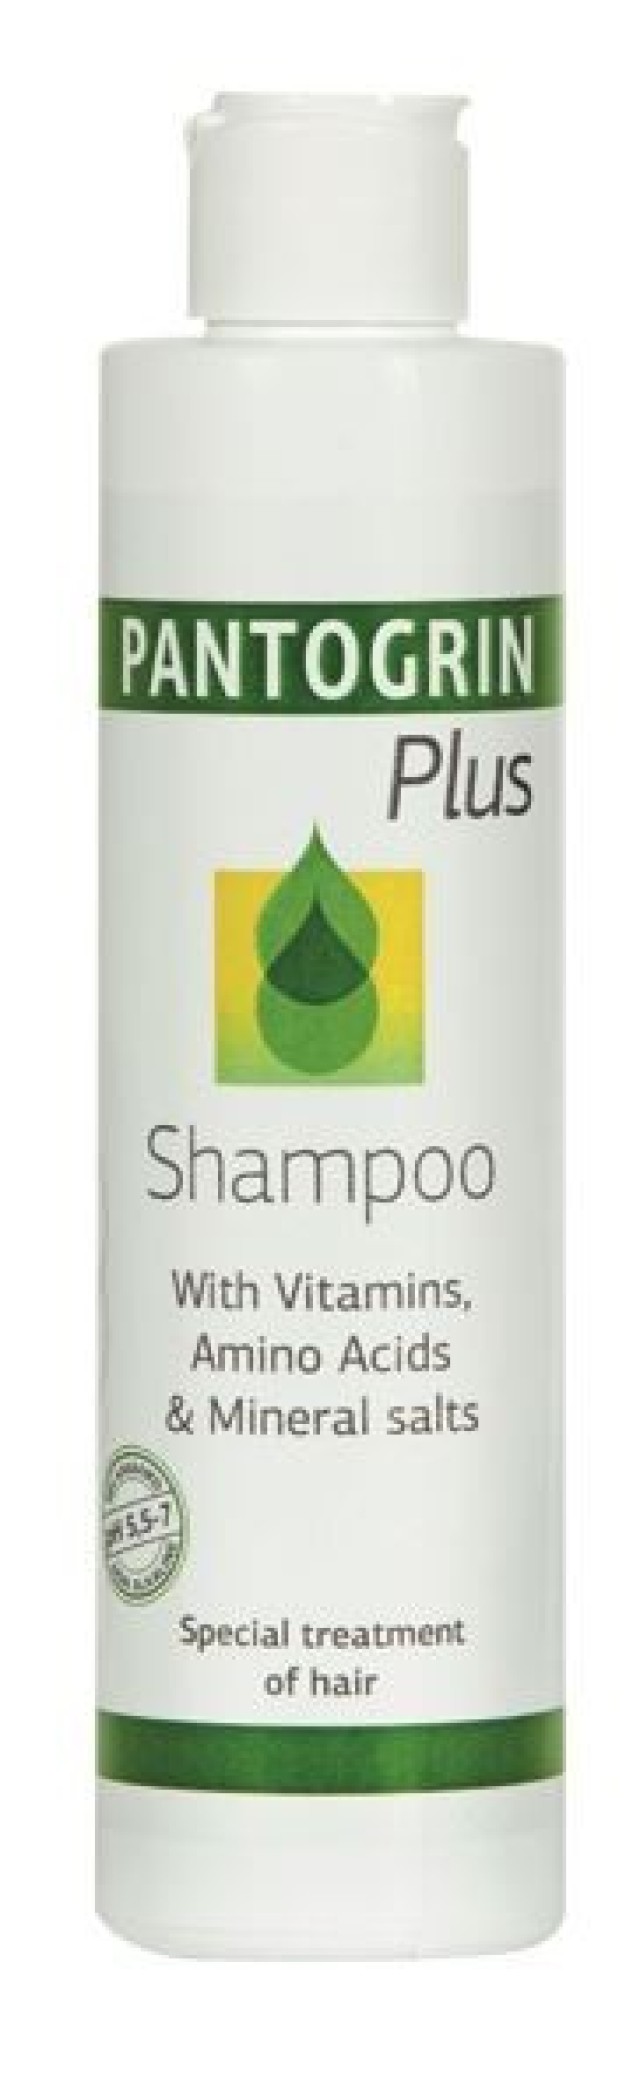 Froika Pantogrin Plus Shampoo Σαμπουάν για Λεπτά/Εύθραυστα Μαλλιά 200ml